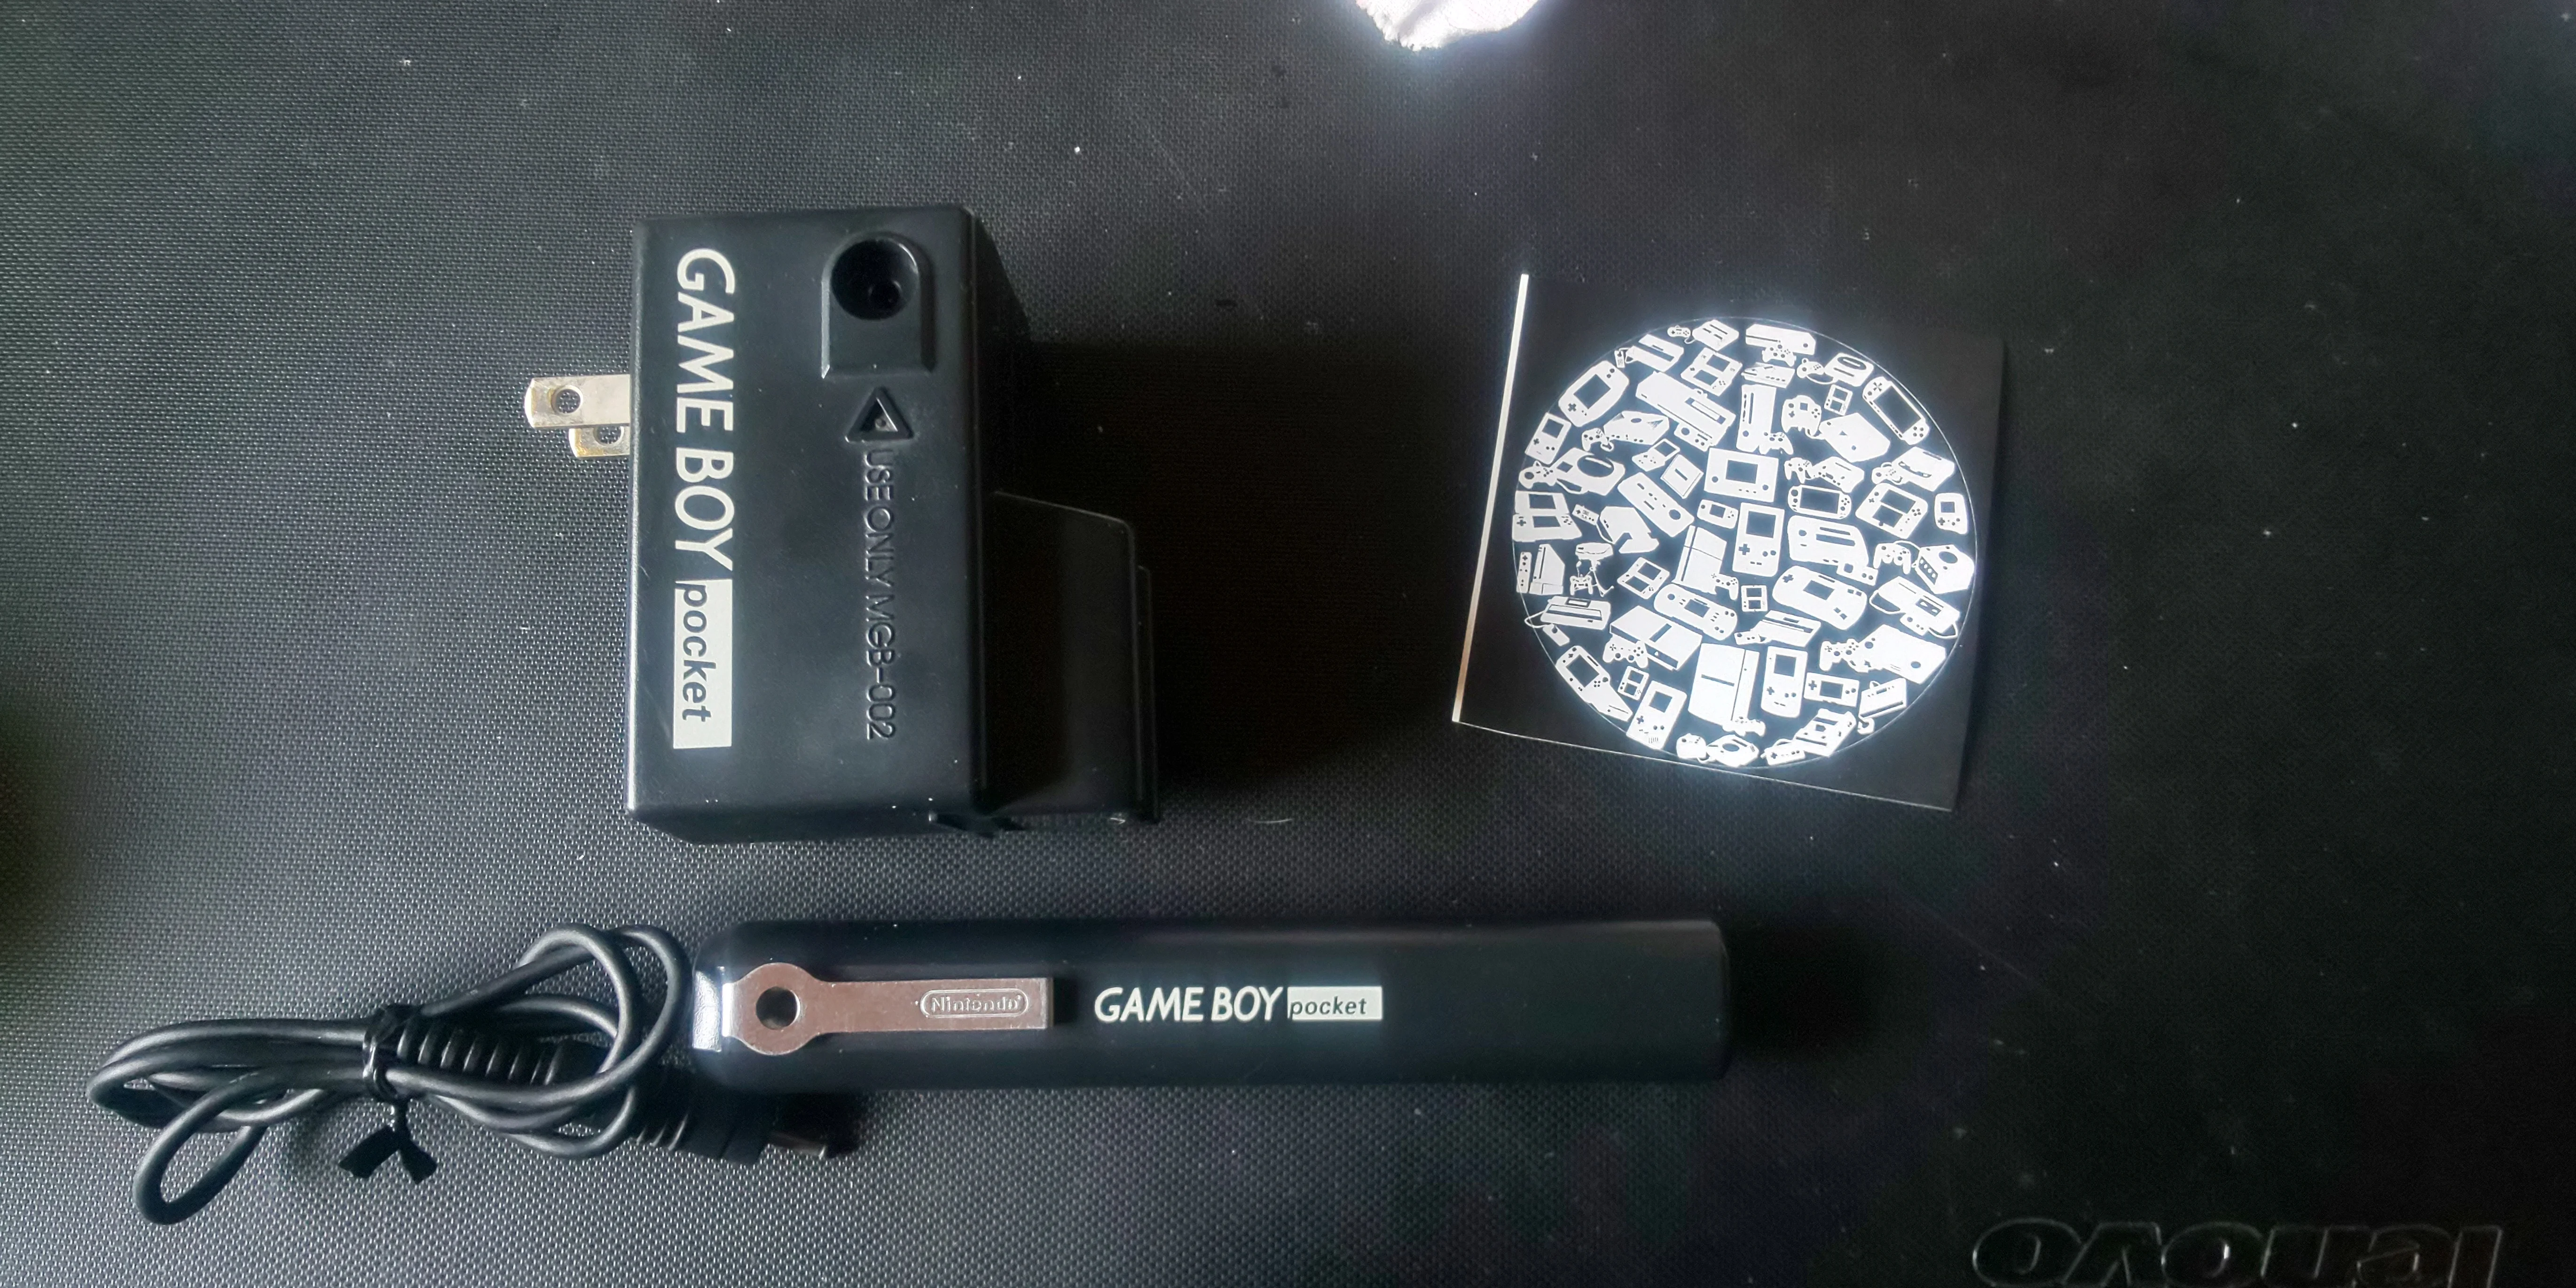  Game Boy Pocket External Battery